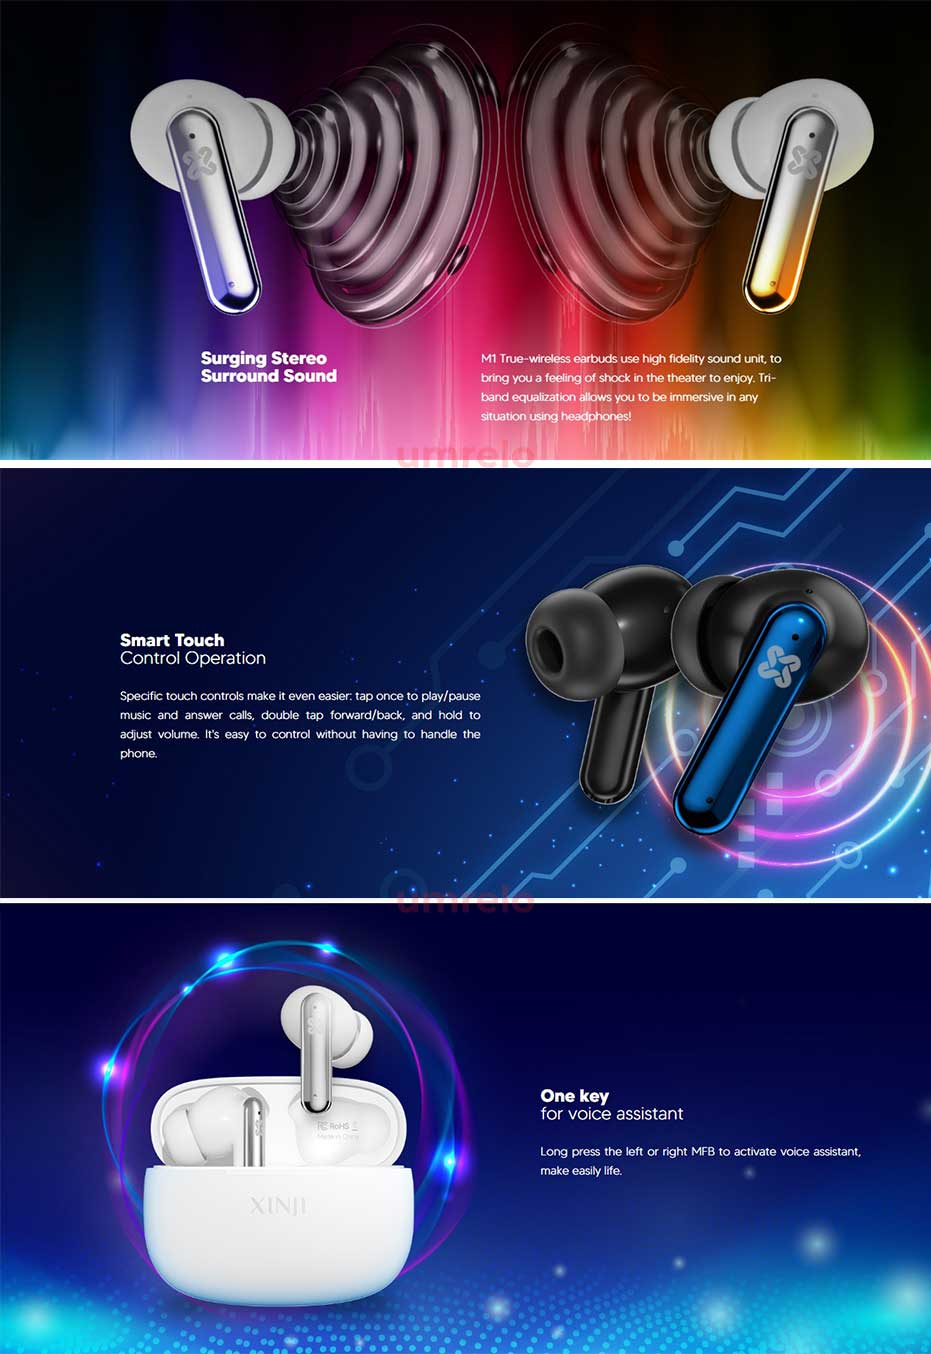 Xinji STONE M1 True Wireless Earbuds 3